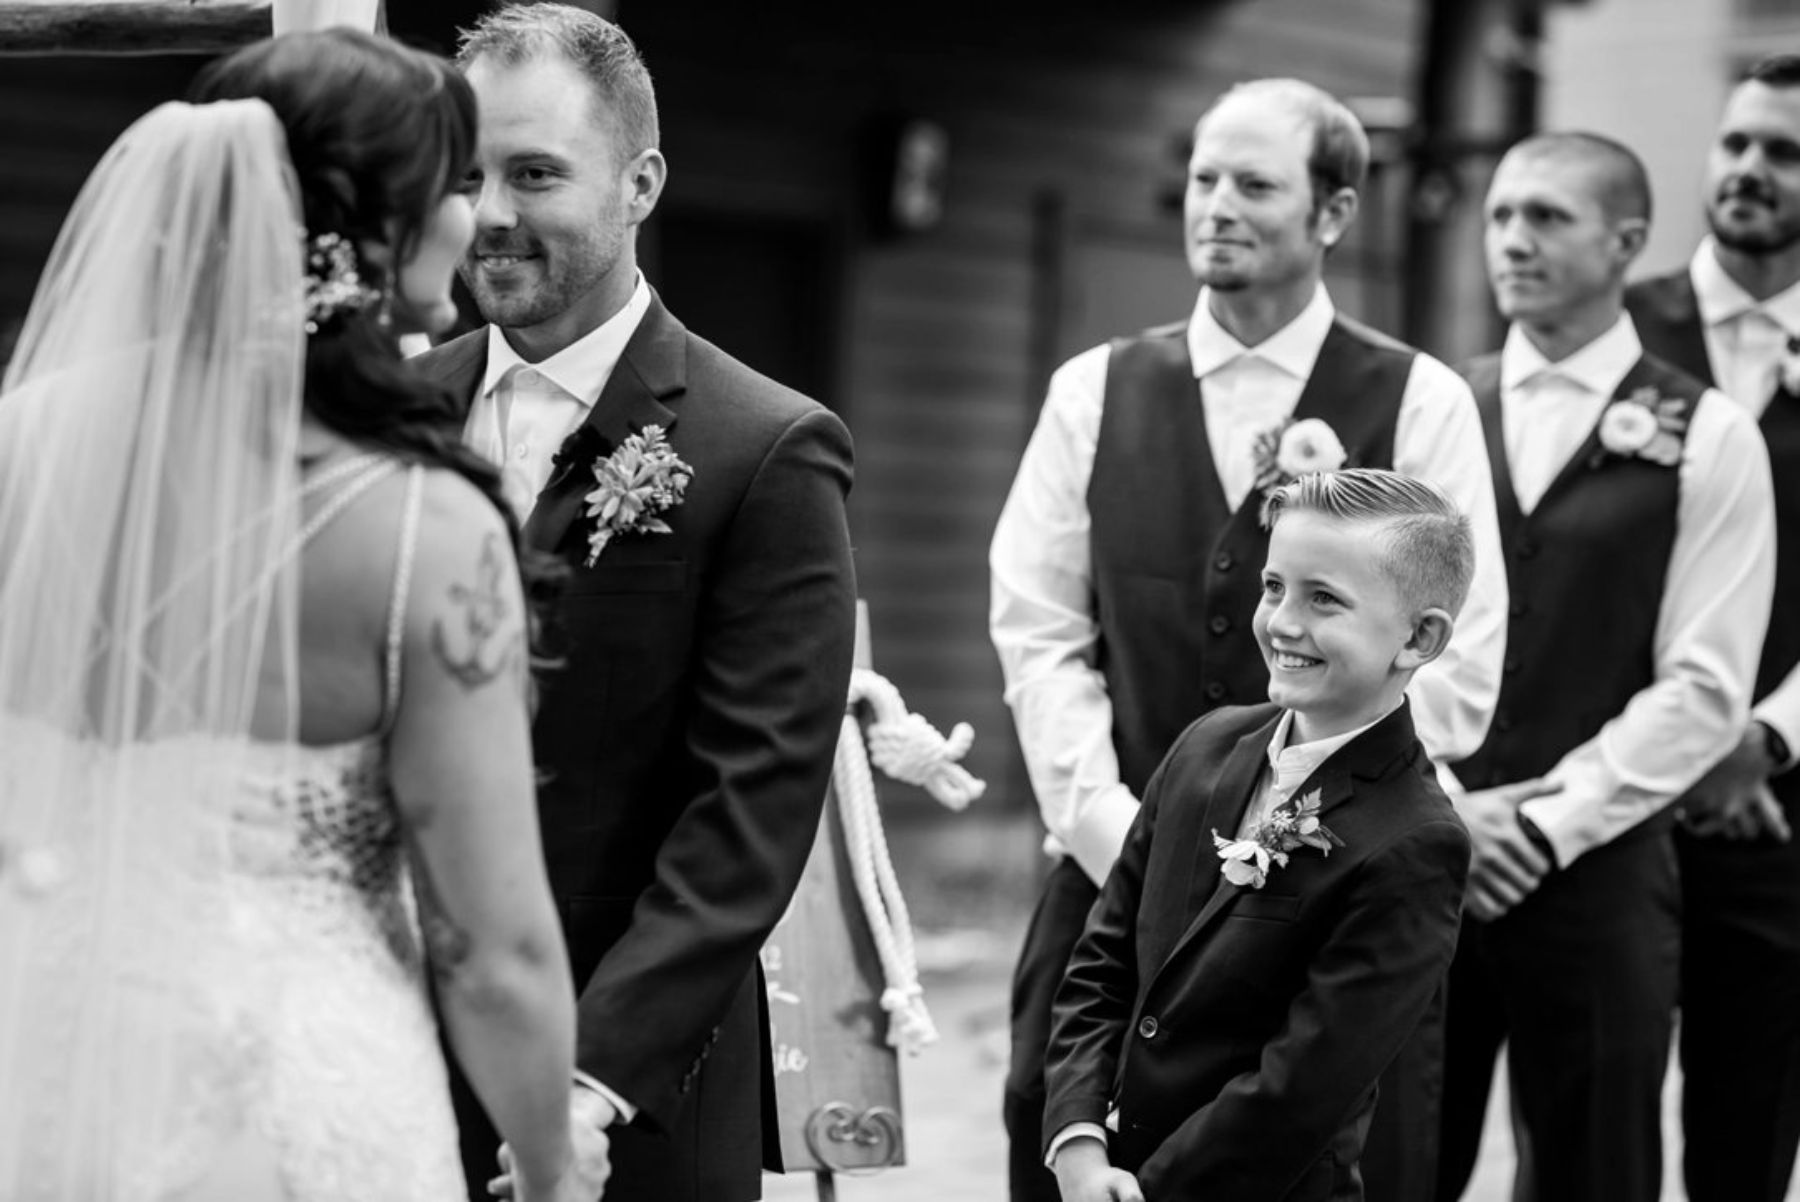 Young boy smiling at bride alongside groomsmen